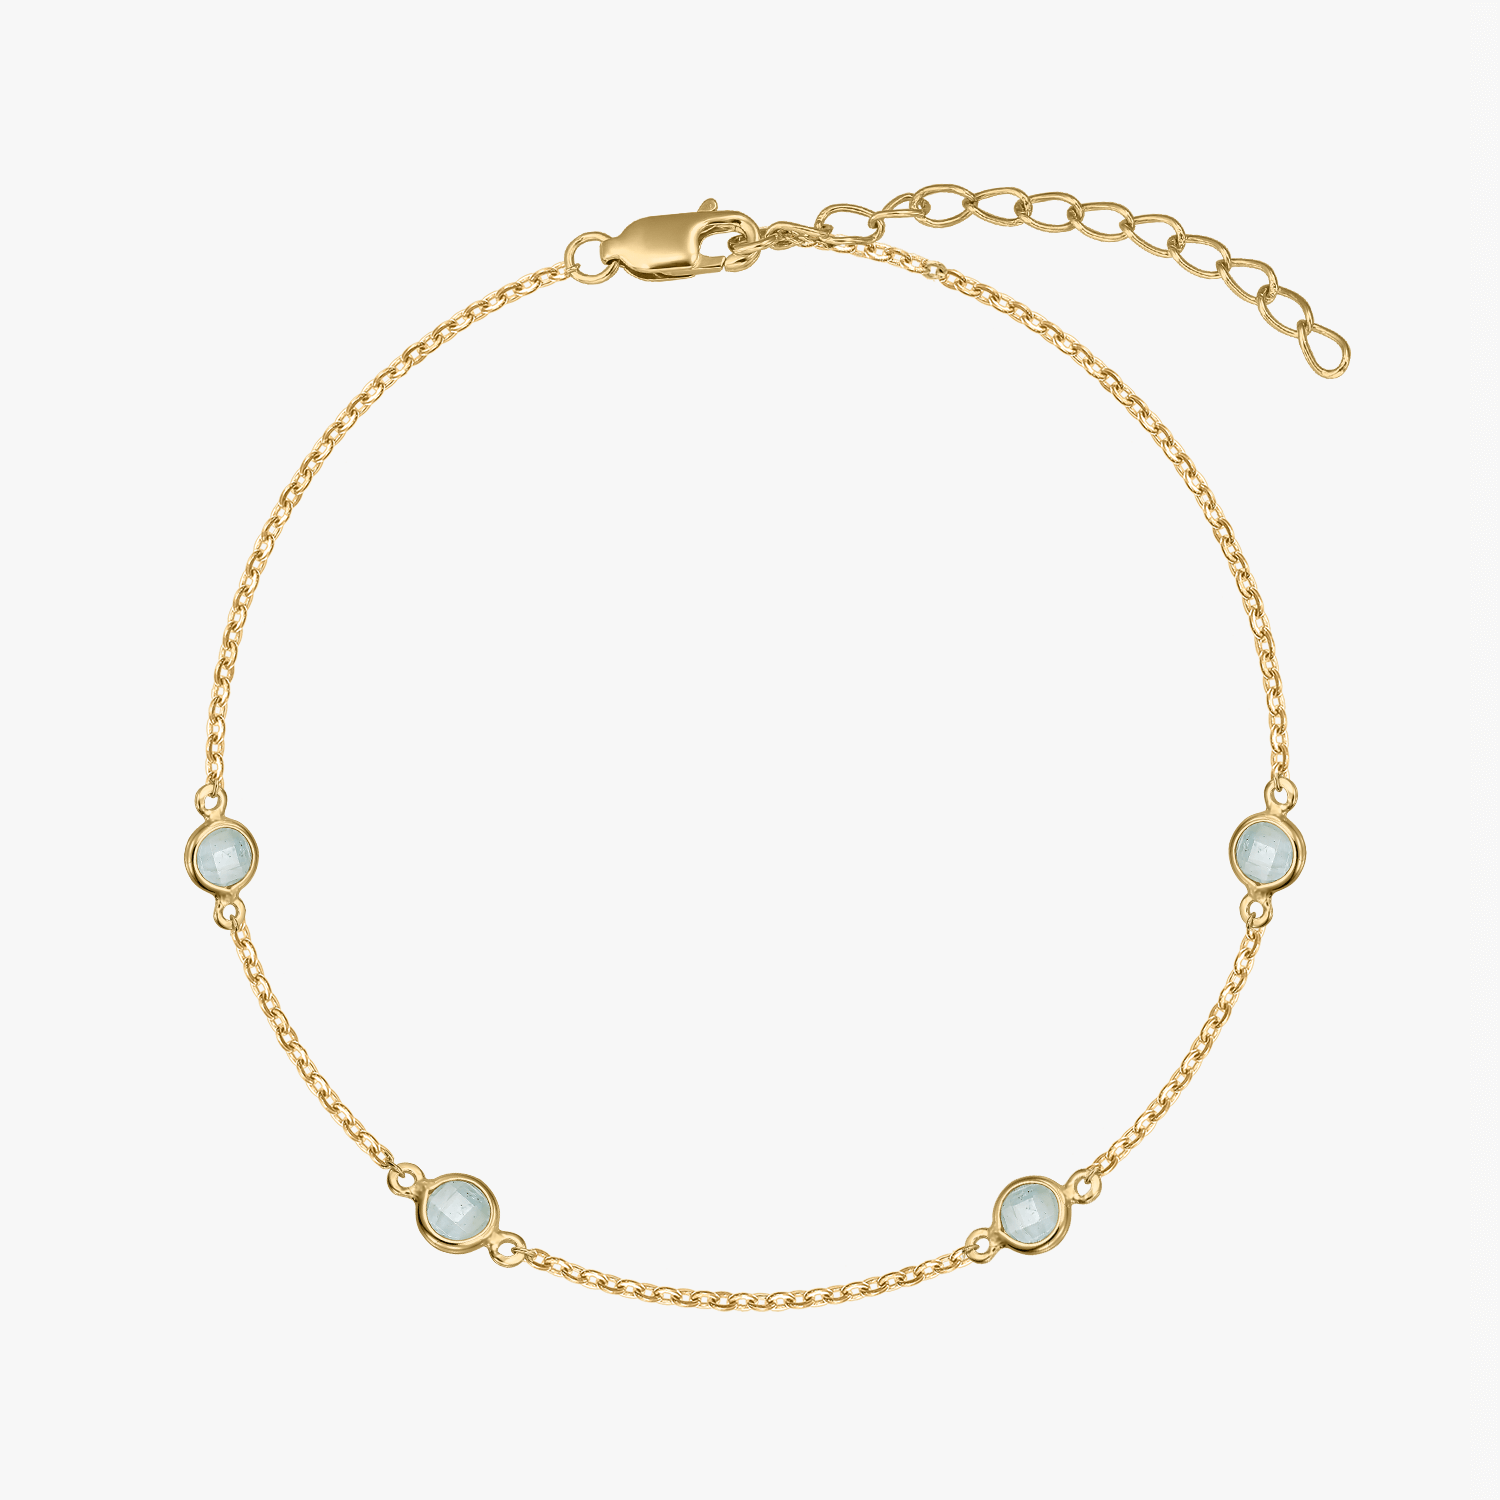 Birthstone Golden March Silver Bracelet - Aquamarine